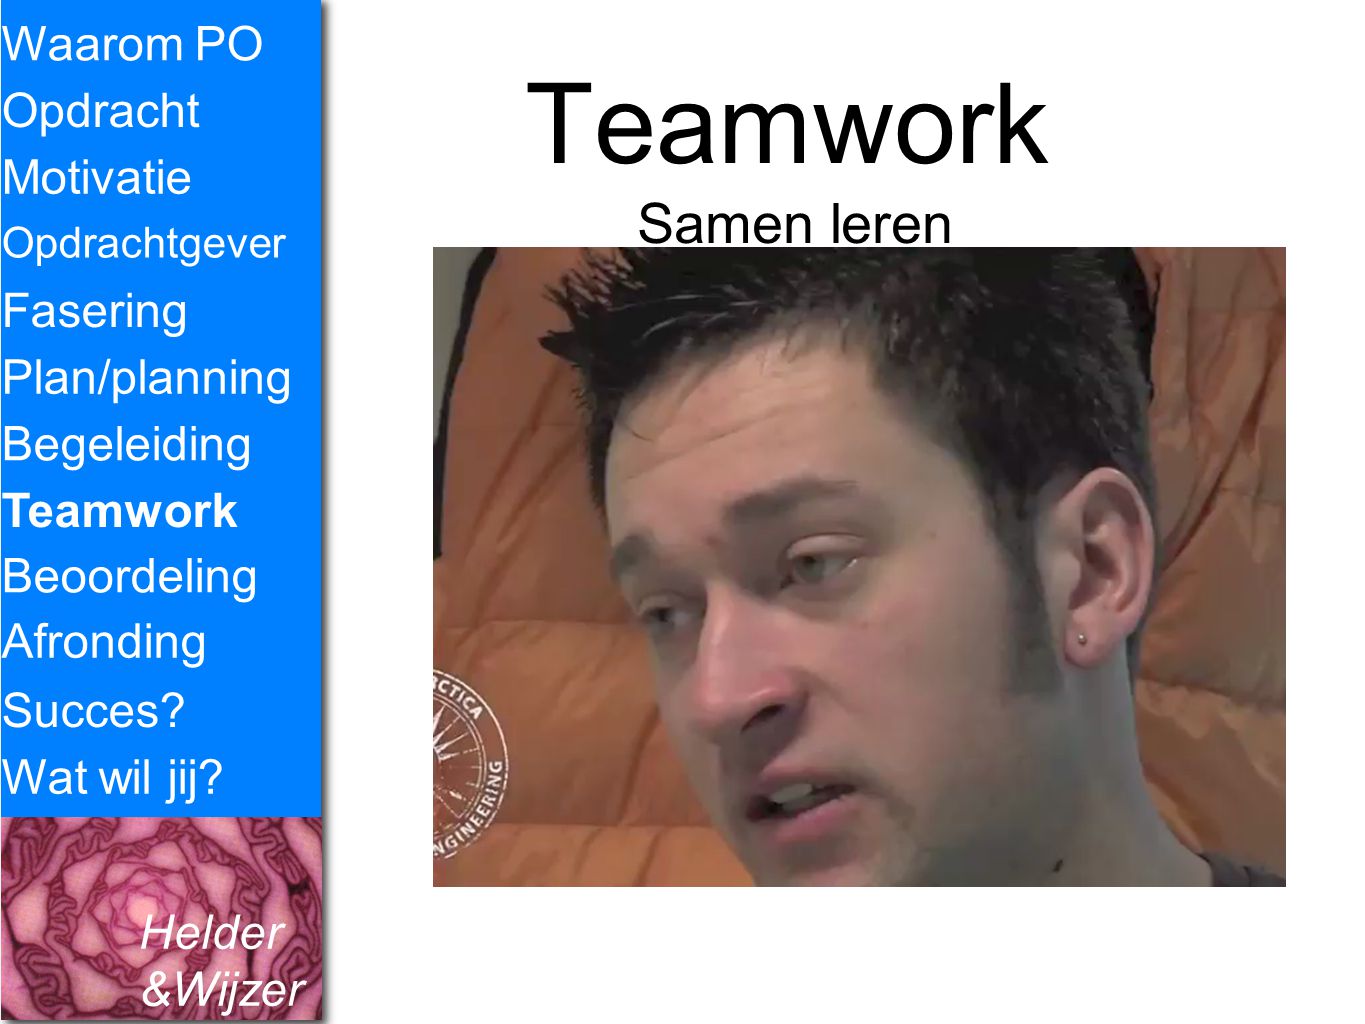 Teamwork Samen leren Waarom PO Opdracht Motivatie Fasering